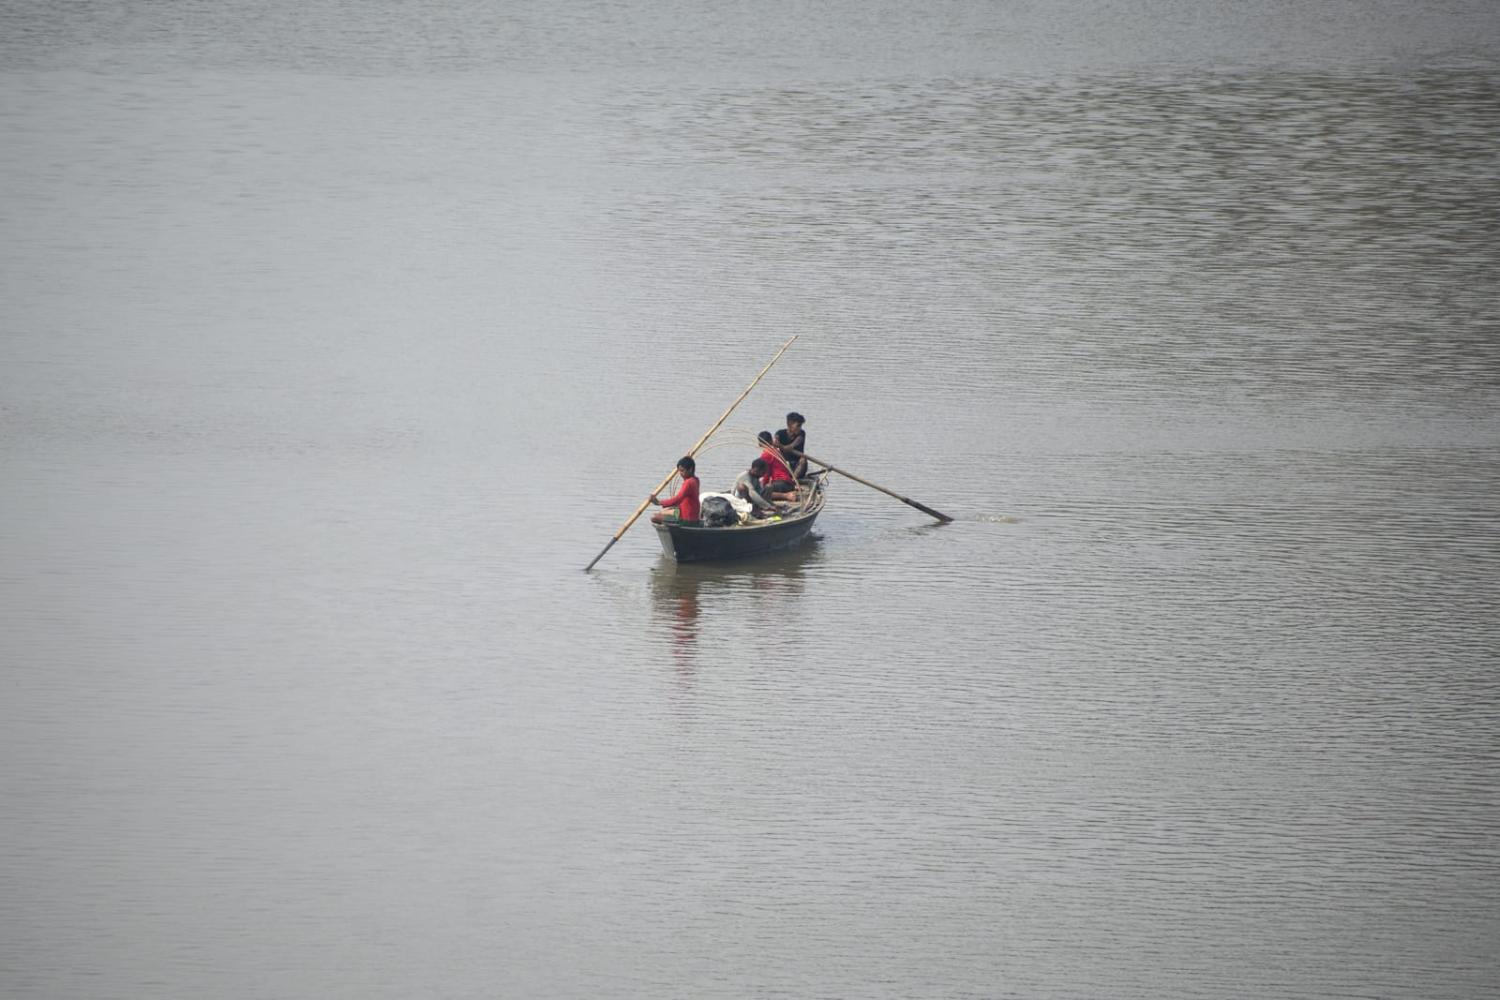 Fishing the Brahmaputra river last month in Guwahati, Assam, India (David Talukdar/NurPhoto via Getty Images)